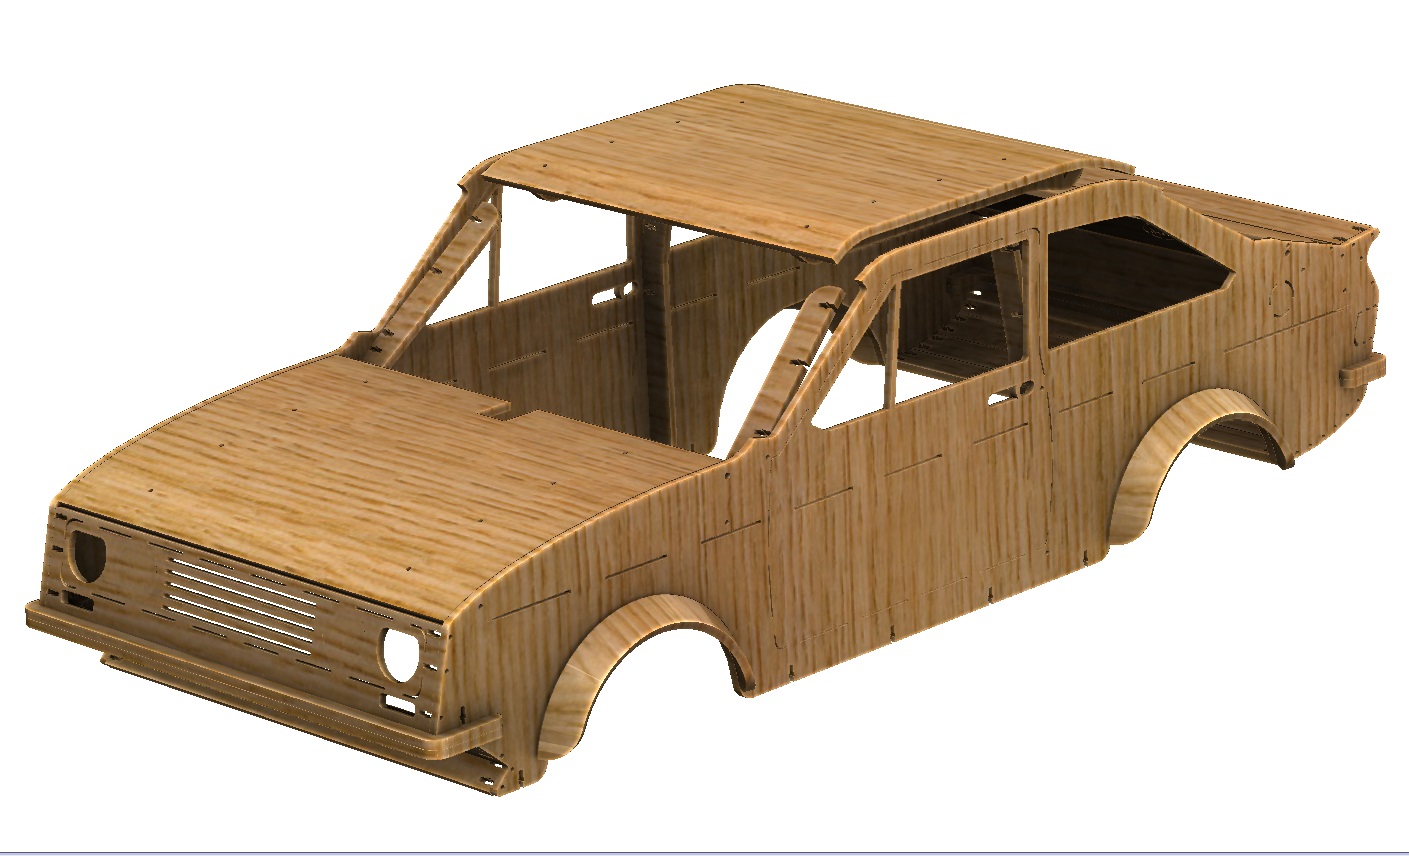 Plywood models